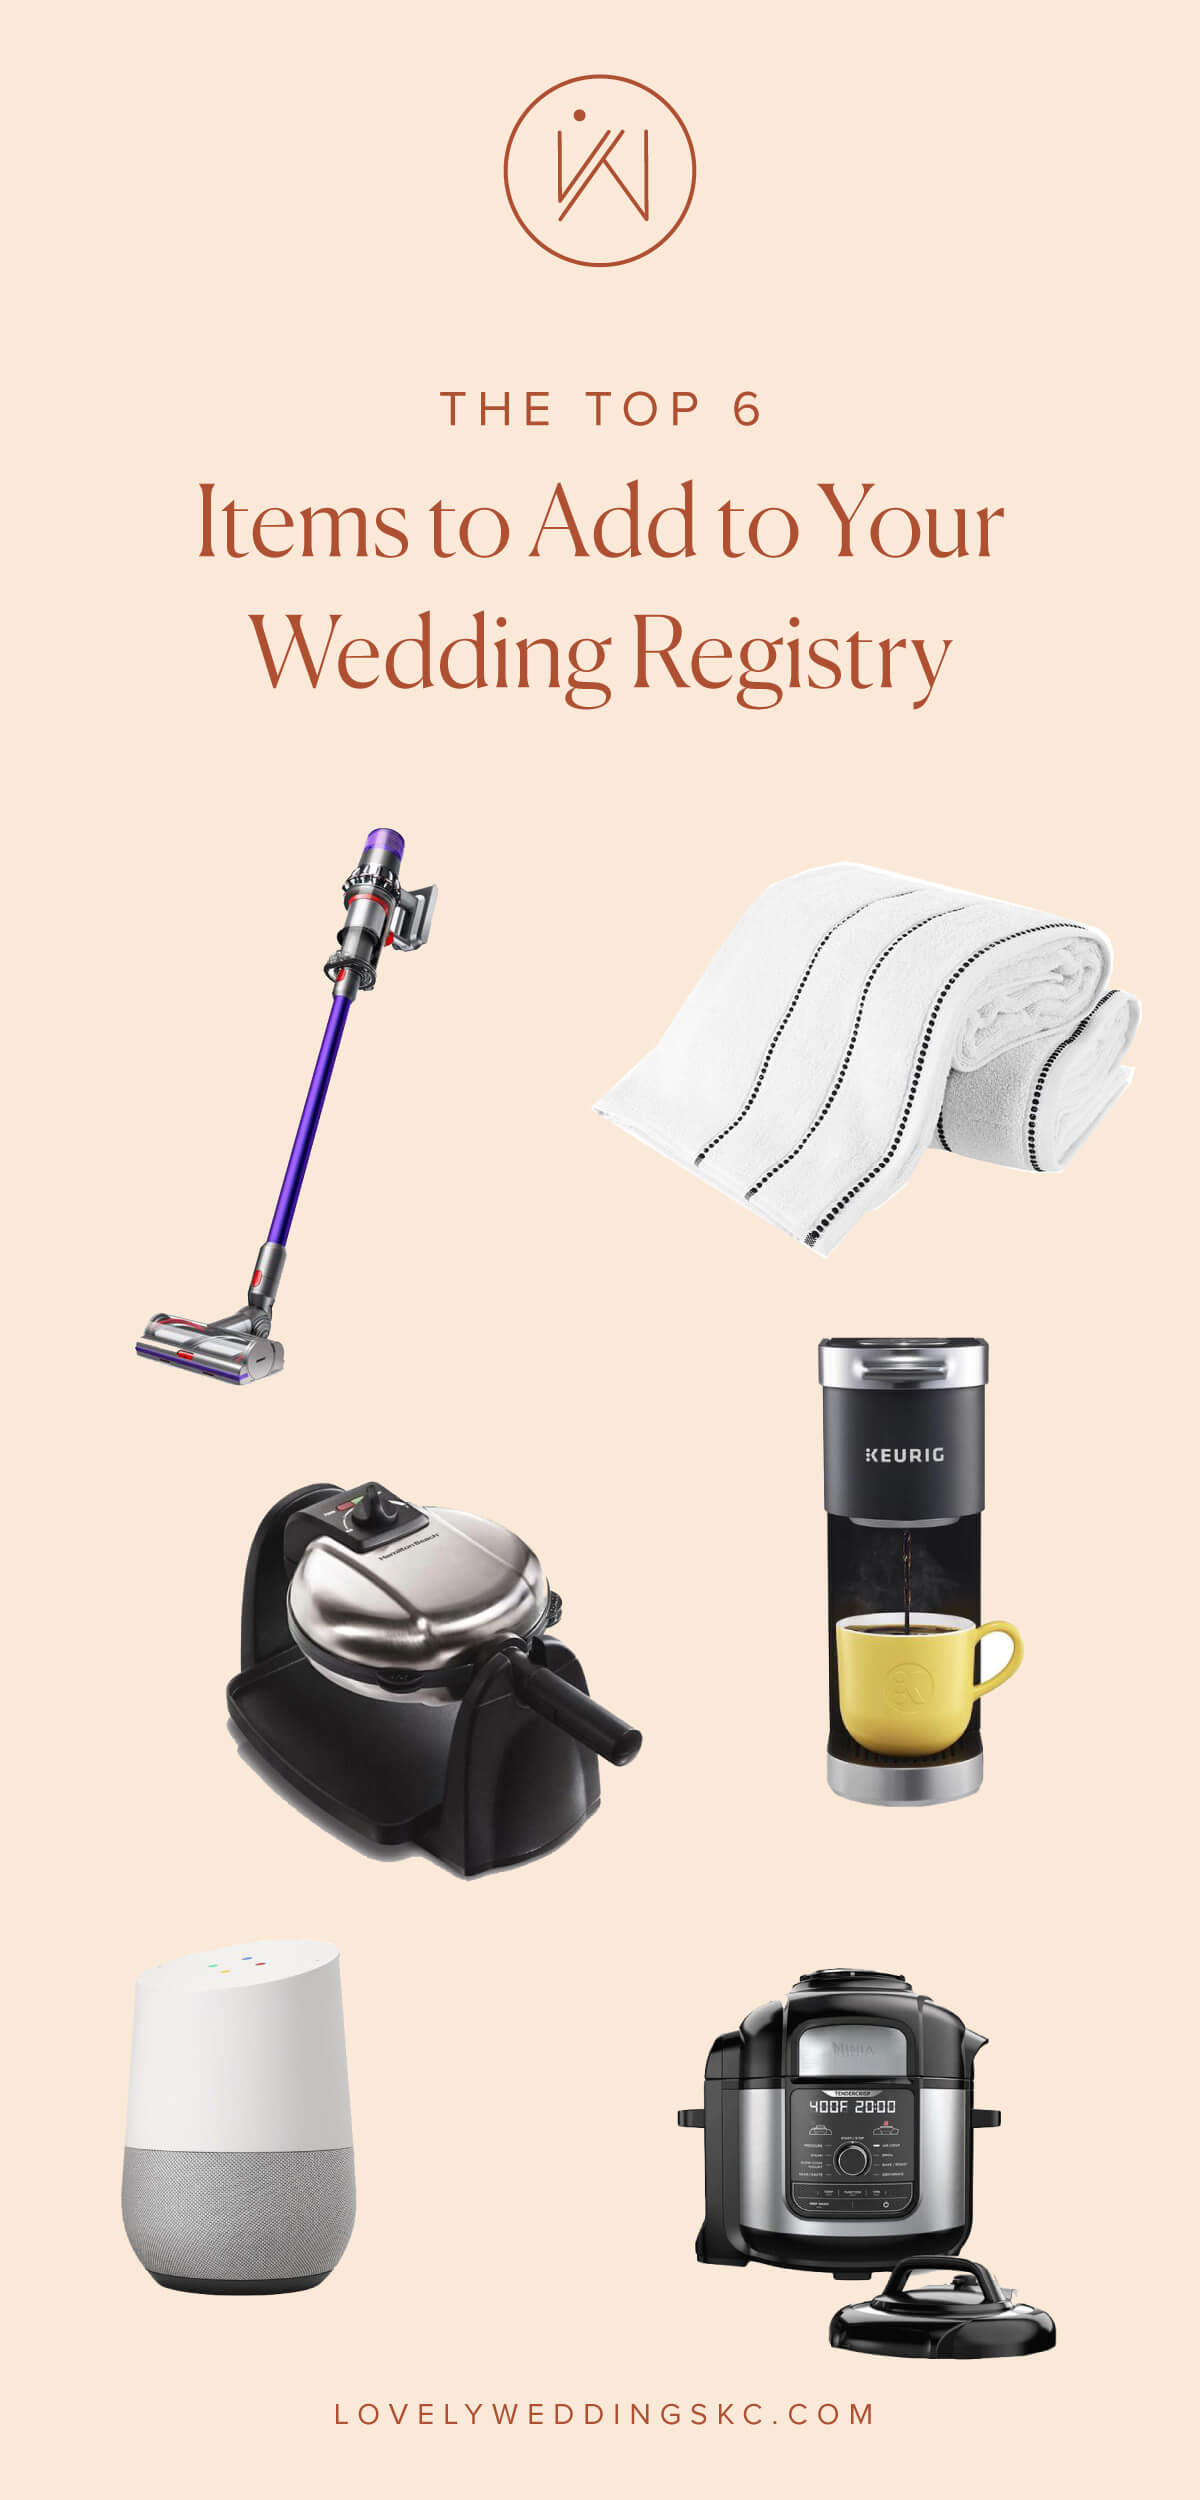 My Top 5 Wedding Registry Items